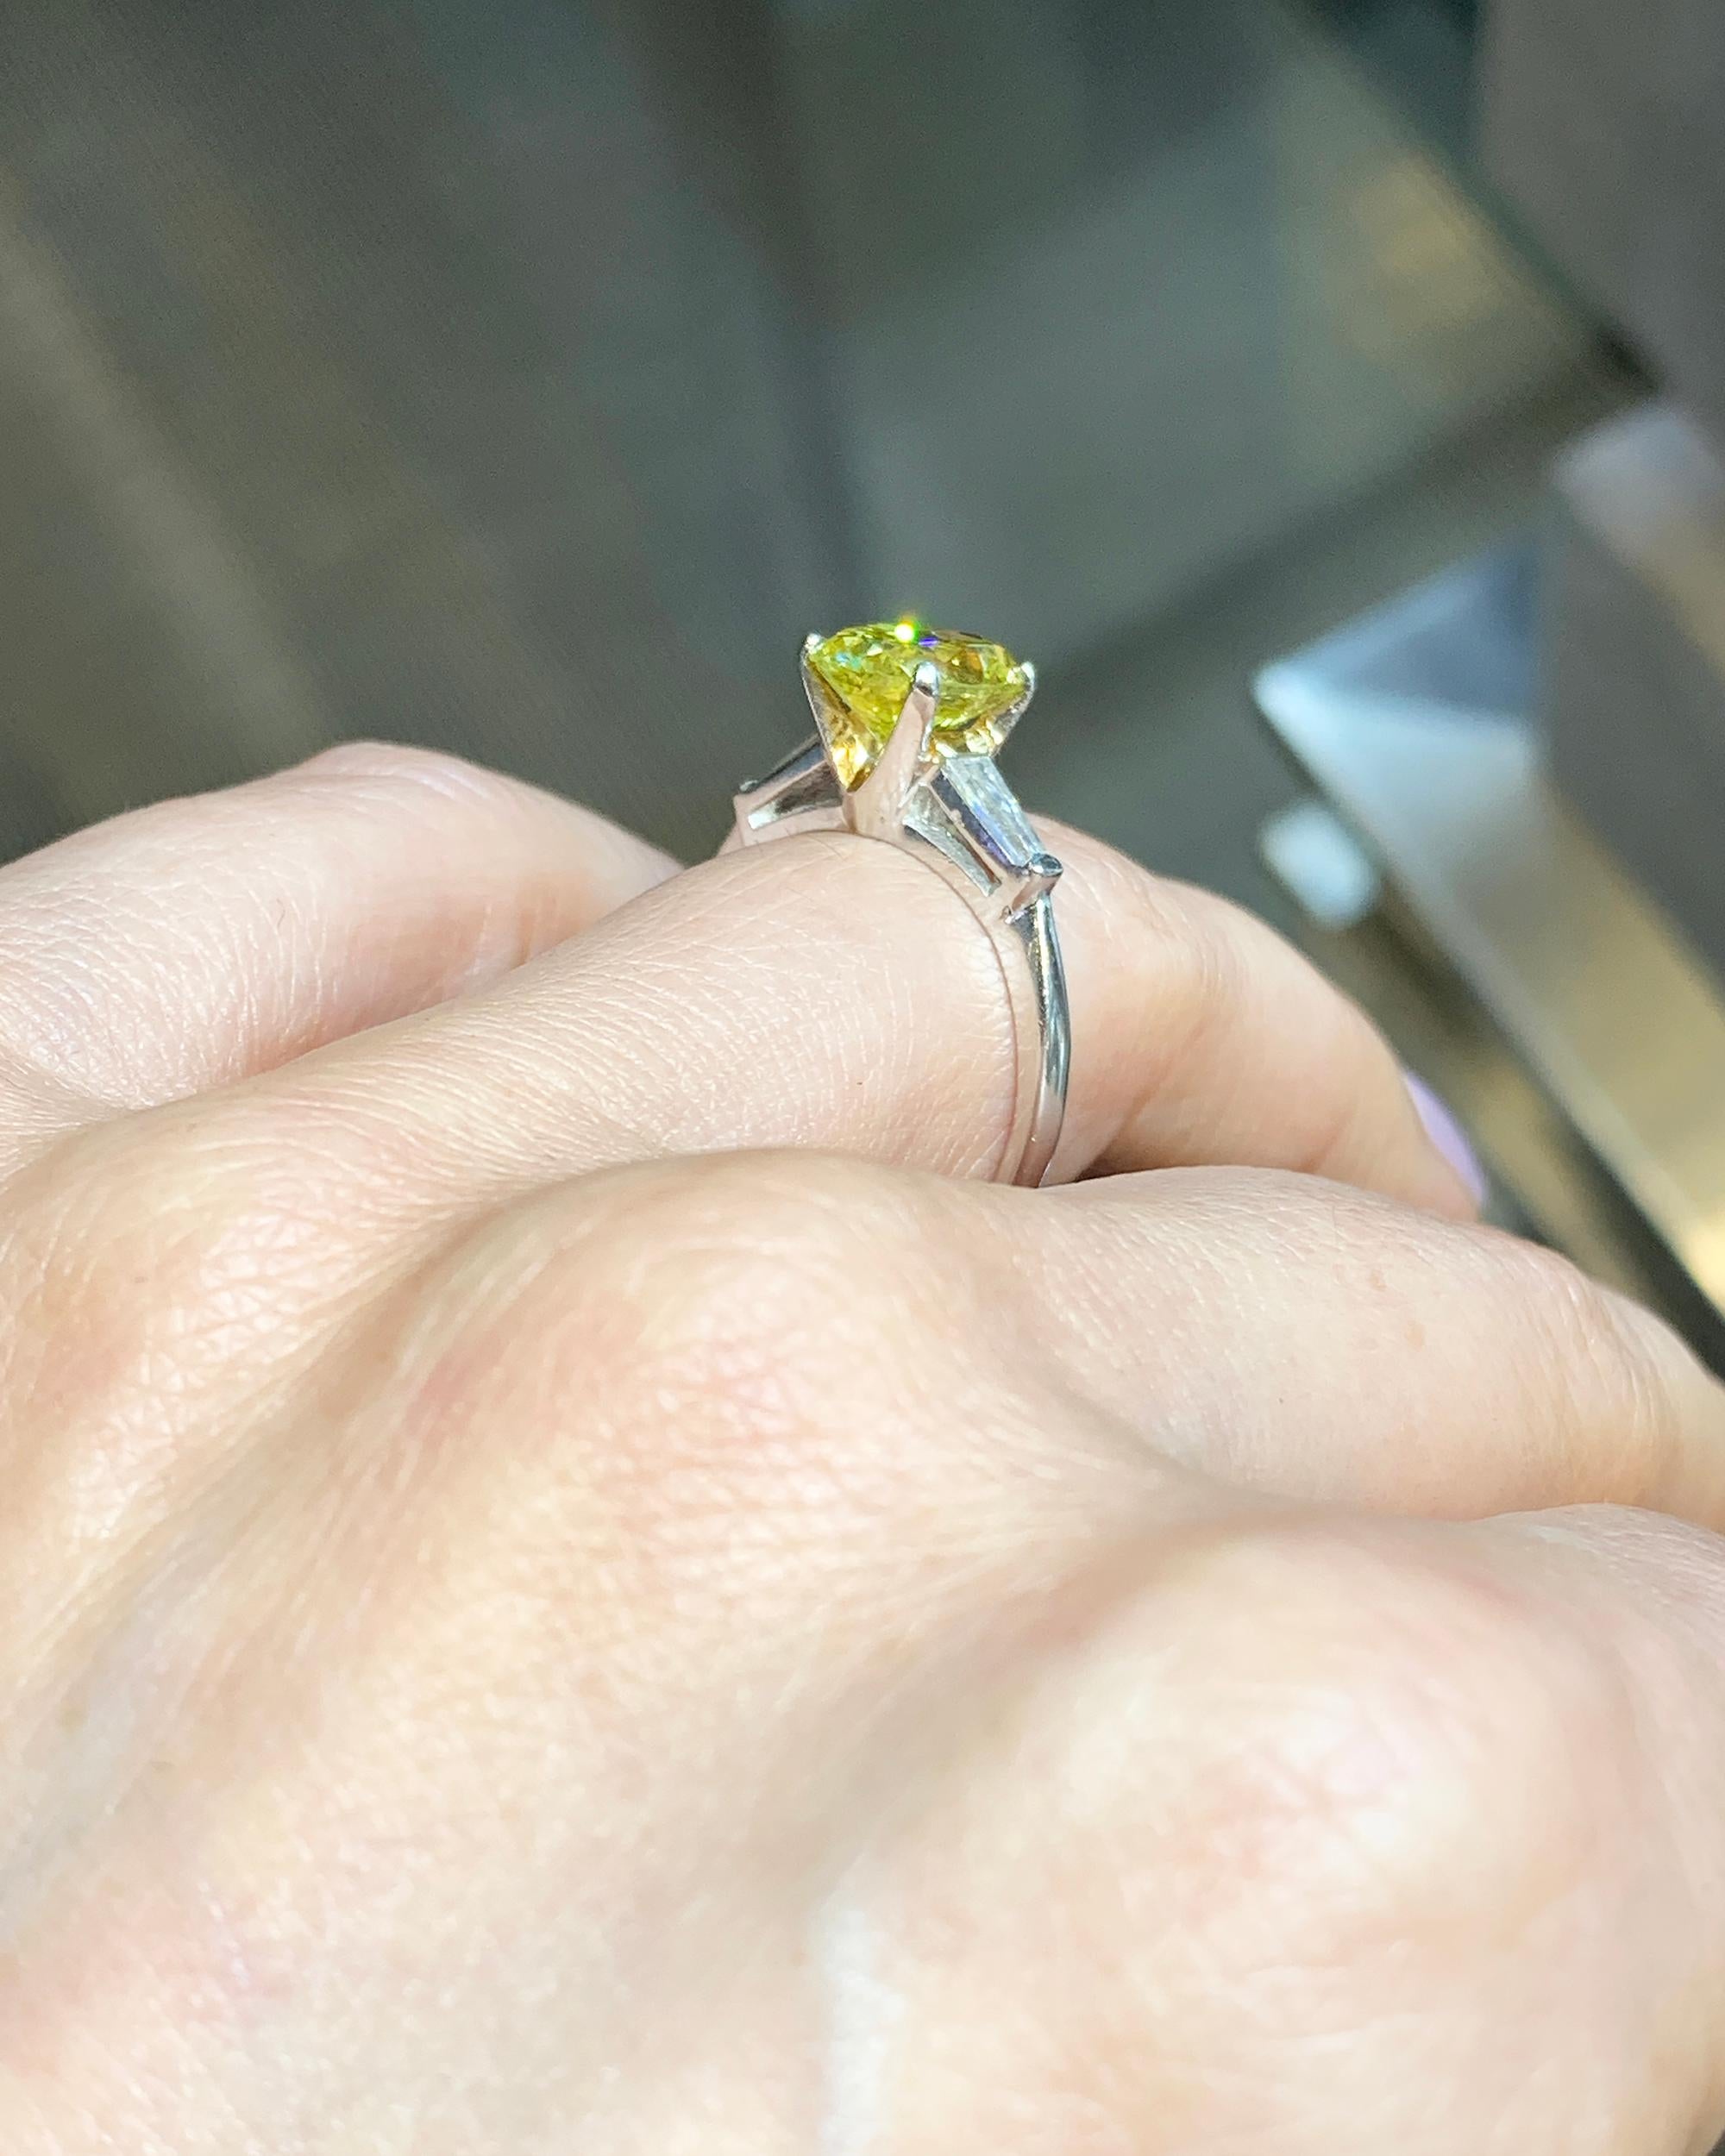 Oval Cut Spectra Fine Jewelry, GIA Certified 2.14 Carat Fancy Vivid Yellow Diamond Ring For Sale